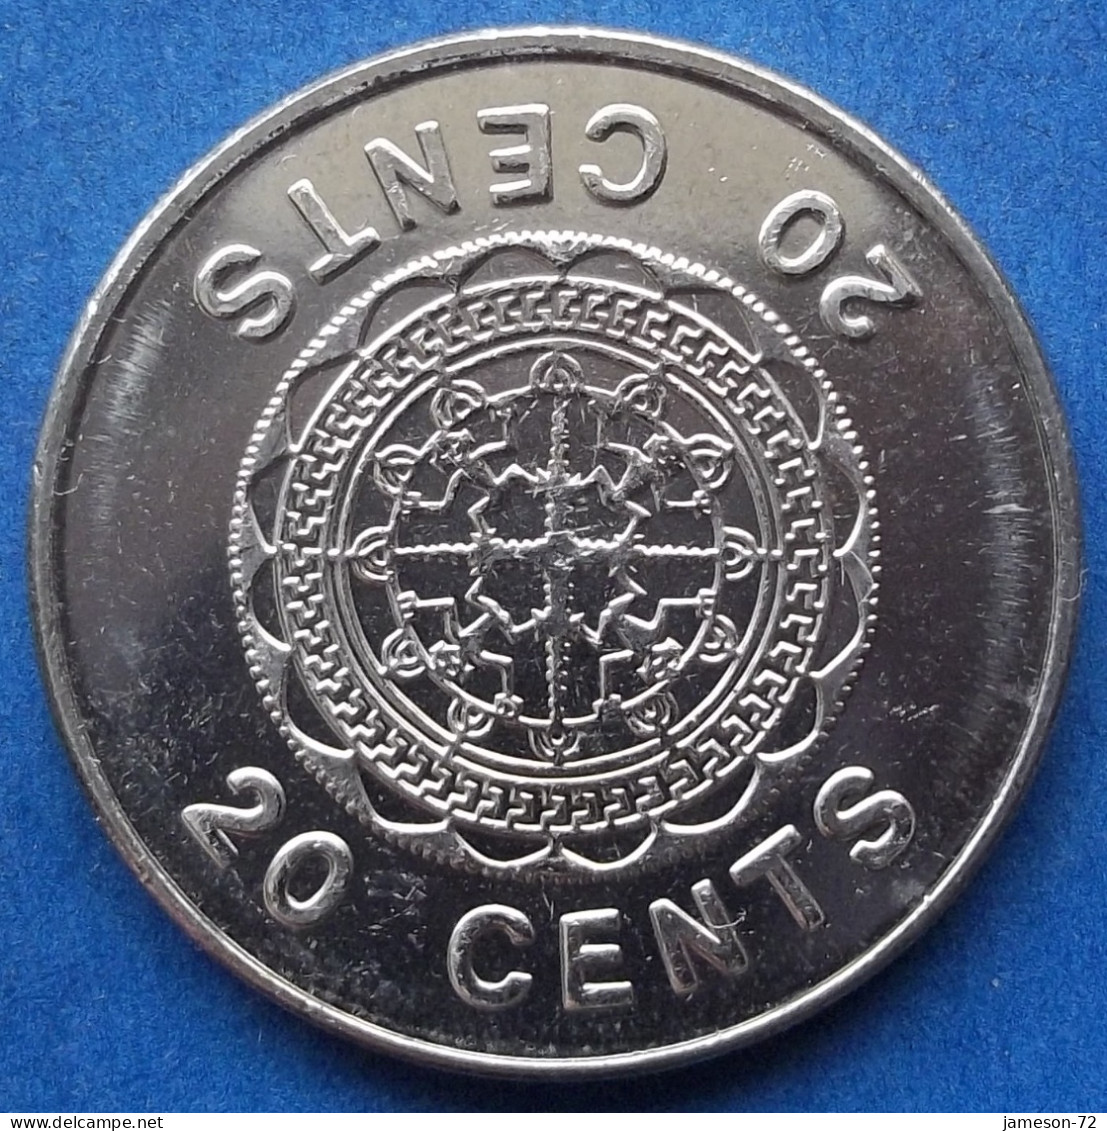 SOLOMON ISLANDS - 20 Censt 2005 "Malaita Pendant" KM# 28 Commonwealth Nation, Elizabeth II - Edelweiss Coins - Islas Salomón